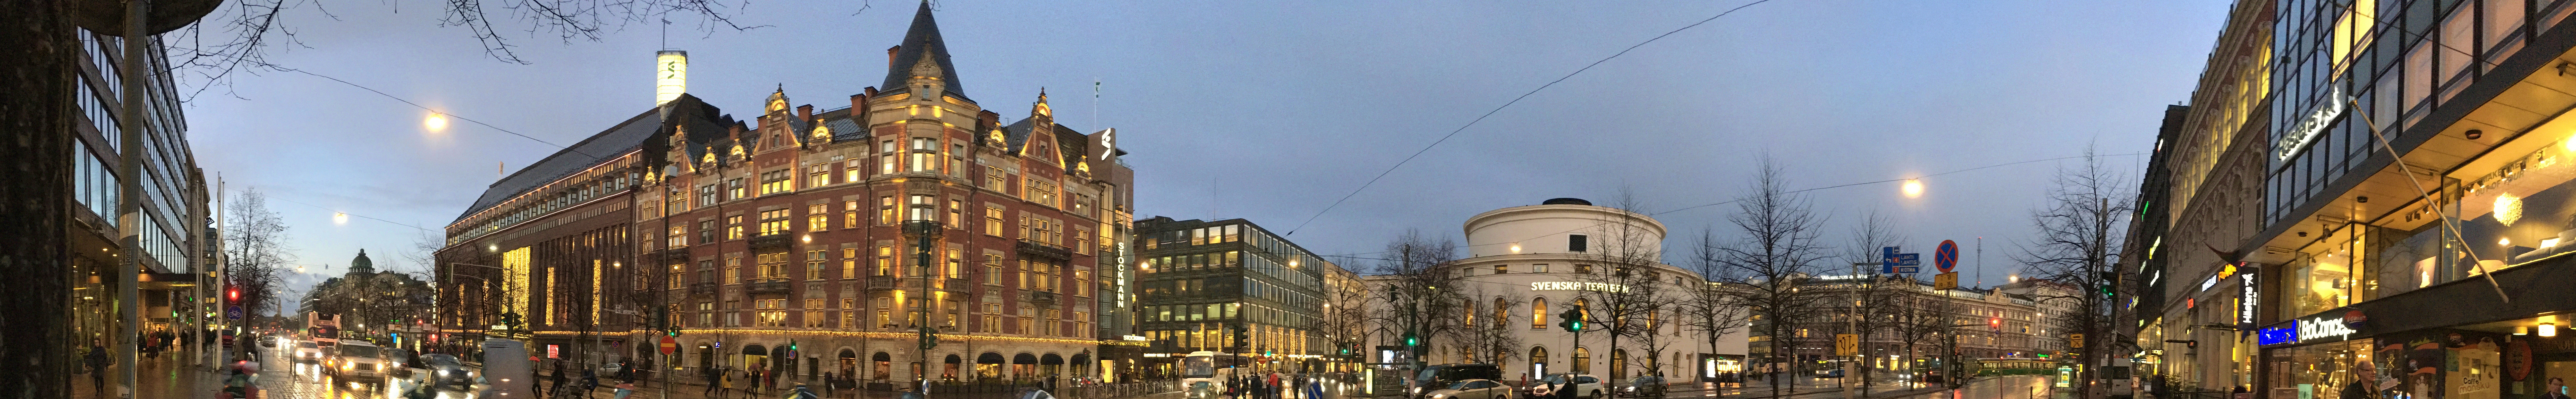 Finland Stockmann Dept Store and Swedish Theatre Helsinki